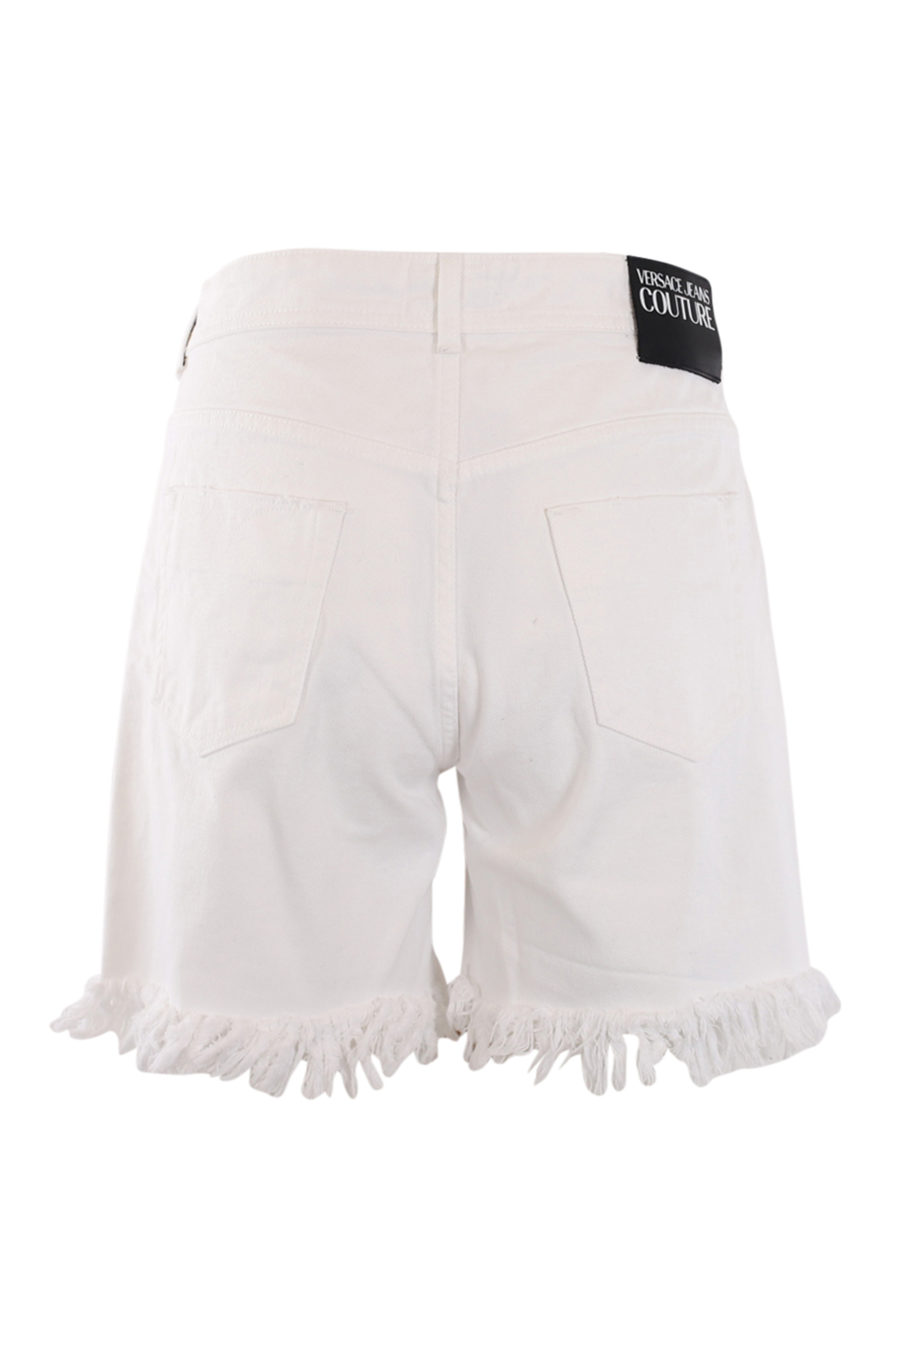 Pantalón corto blanco con pañoleta reversible - IMG 0592